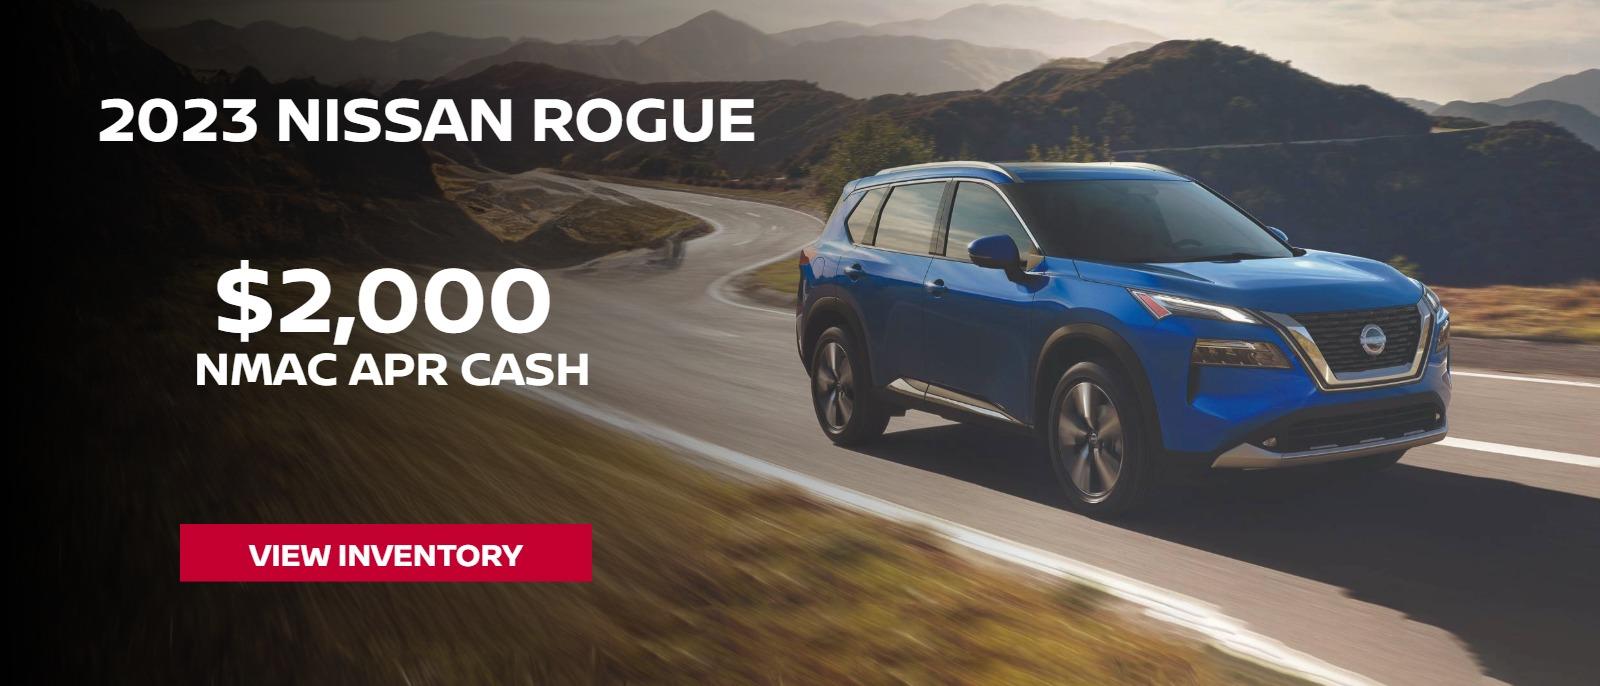 $2000 NMAC APR CASH on 2023
Nissan Rouge